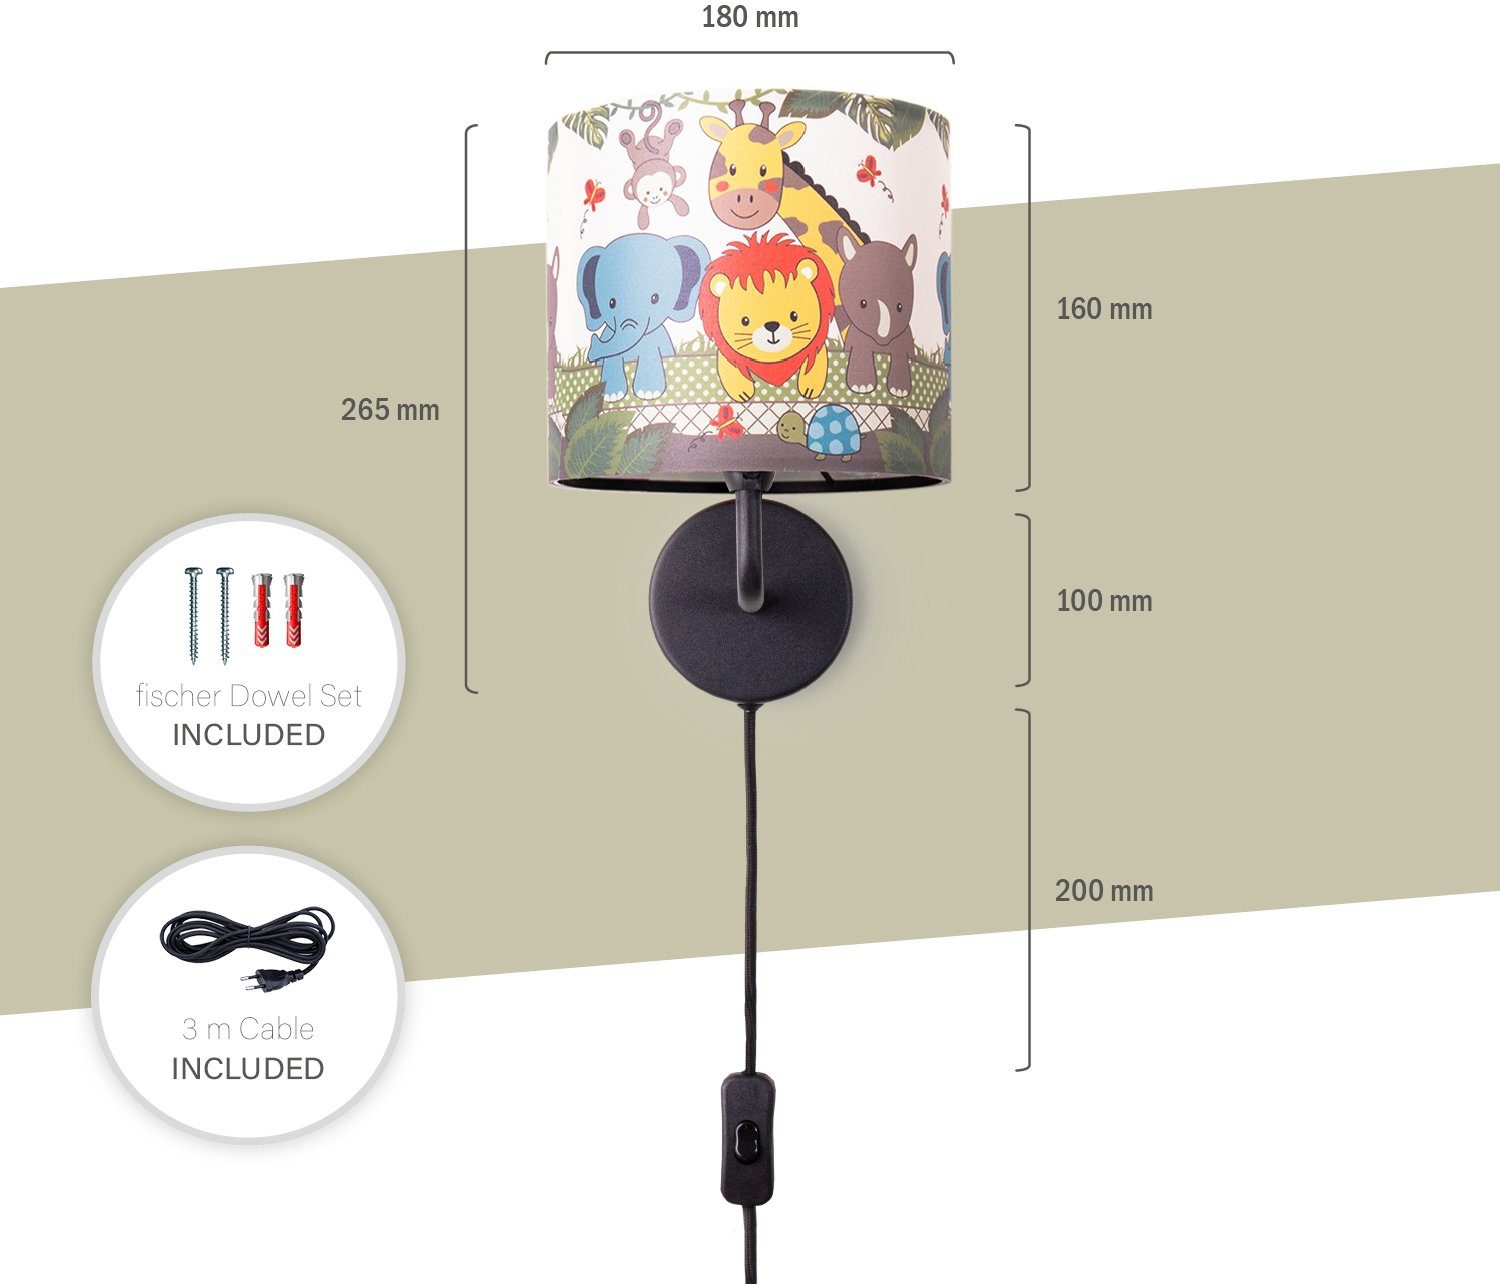 Kabellänge Tiere Zoo 3m Mit Wandleuchte fest âˆ…18cm Home Paco LED 634, Kinderlampe Diamond E14 integriert, Innen